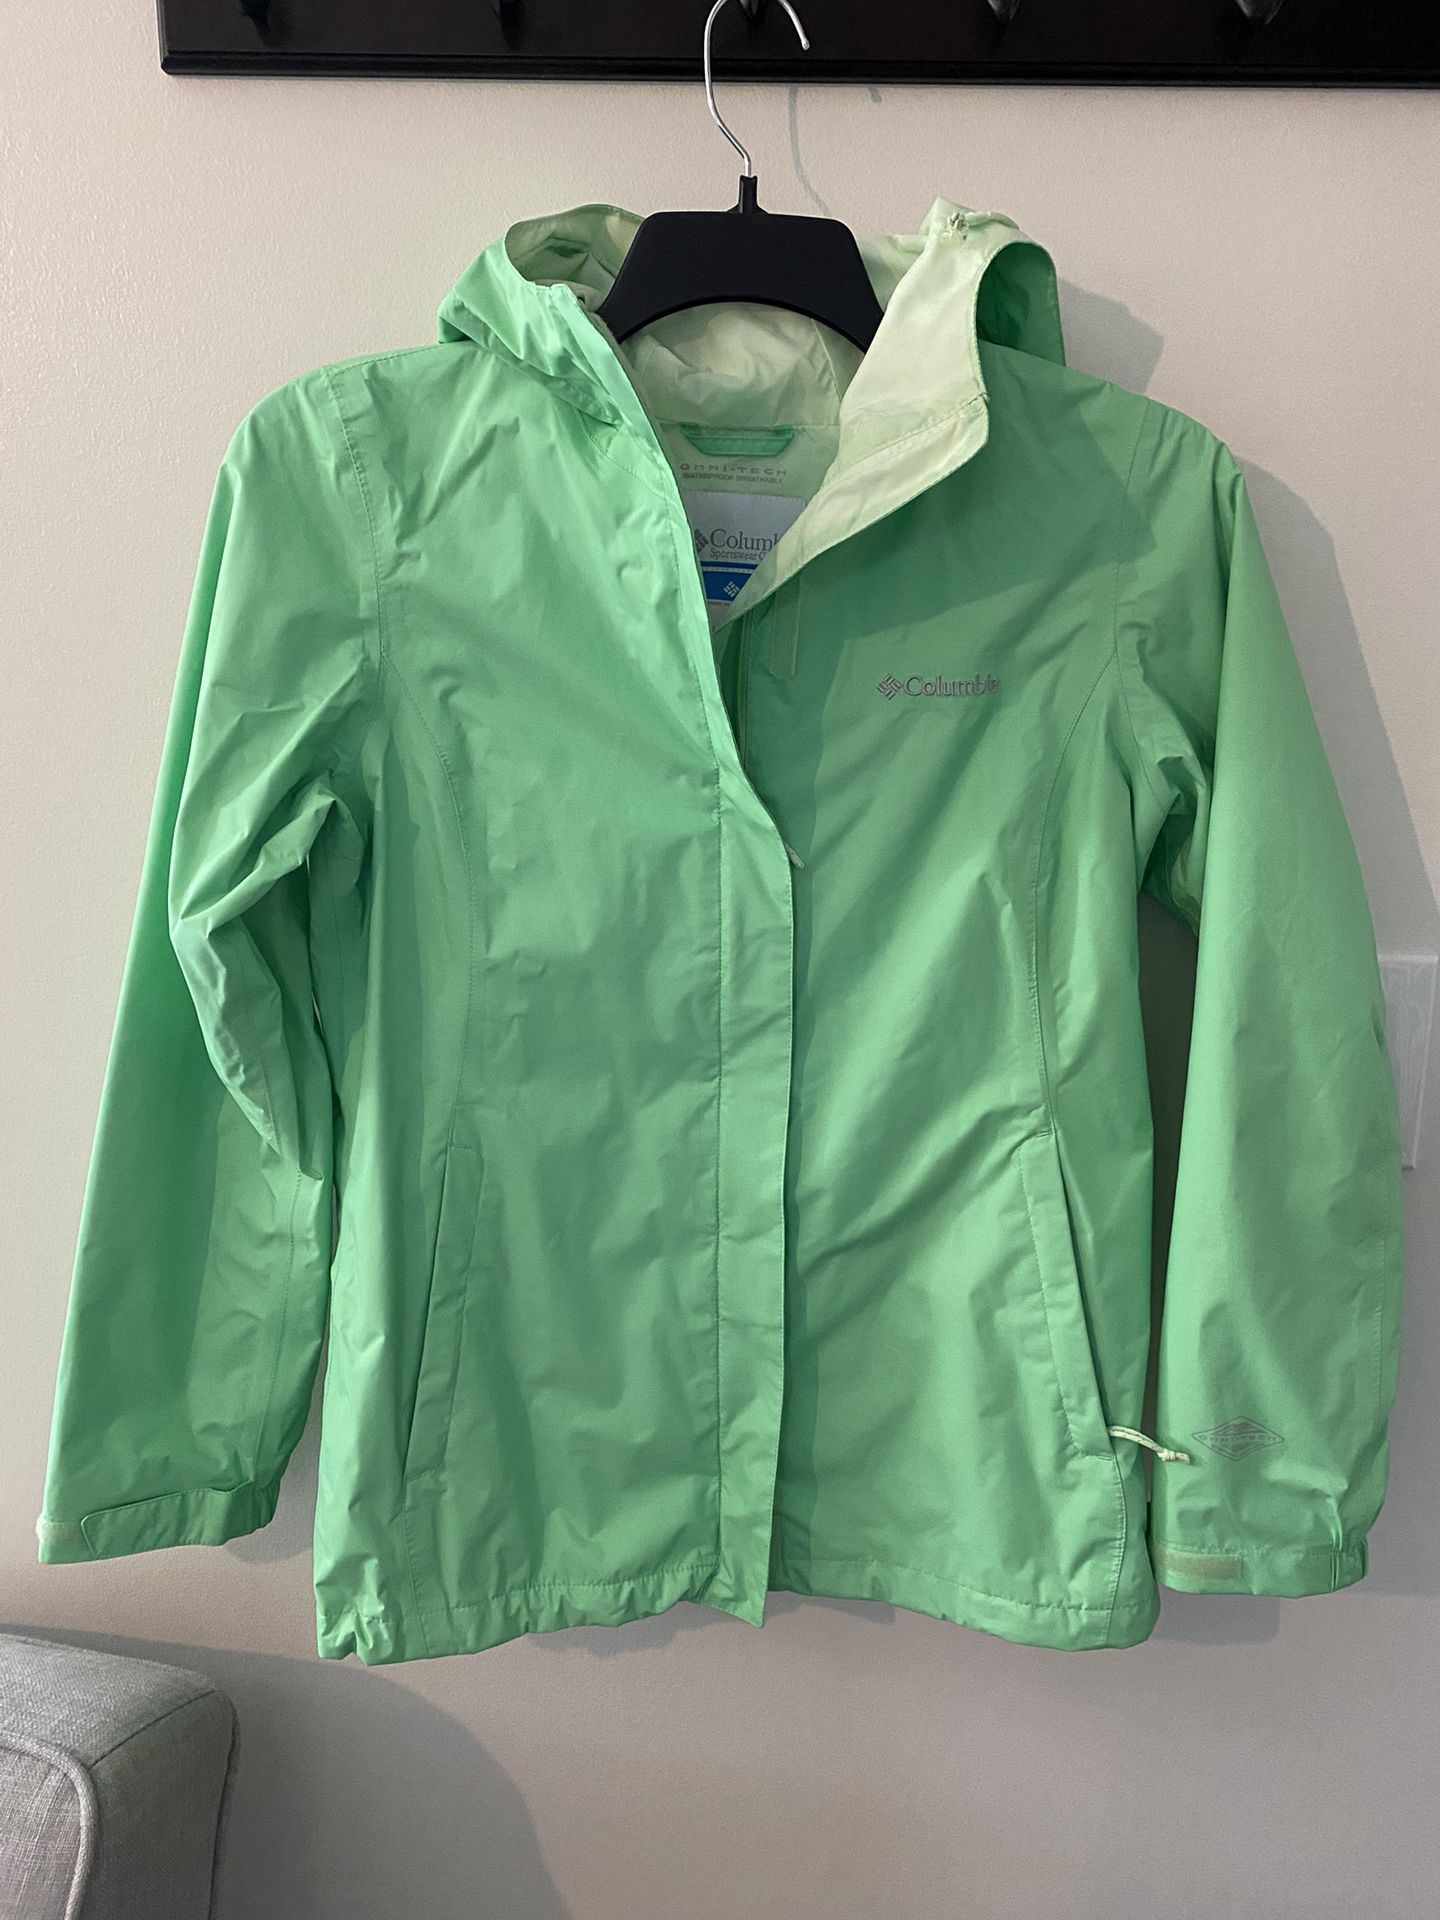 Women's Columbia Rain Jacket